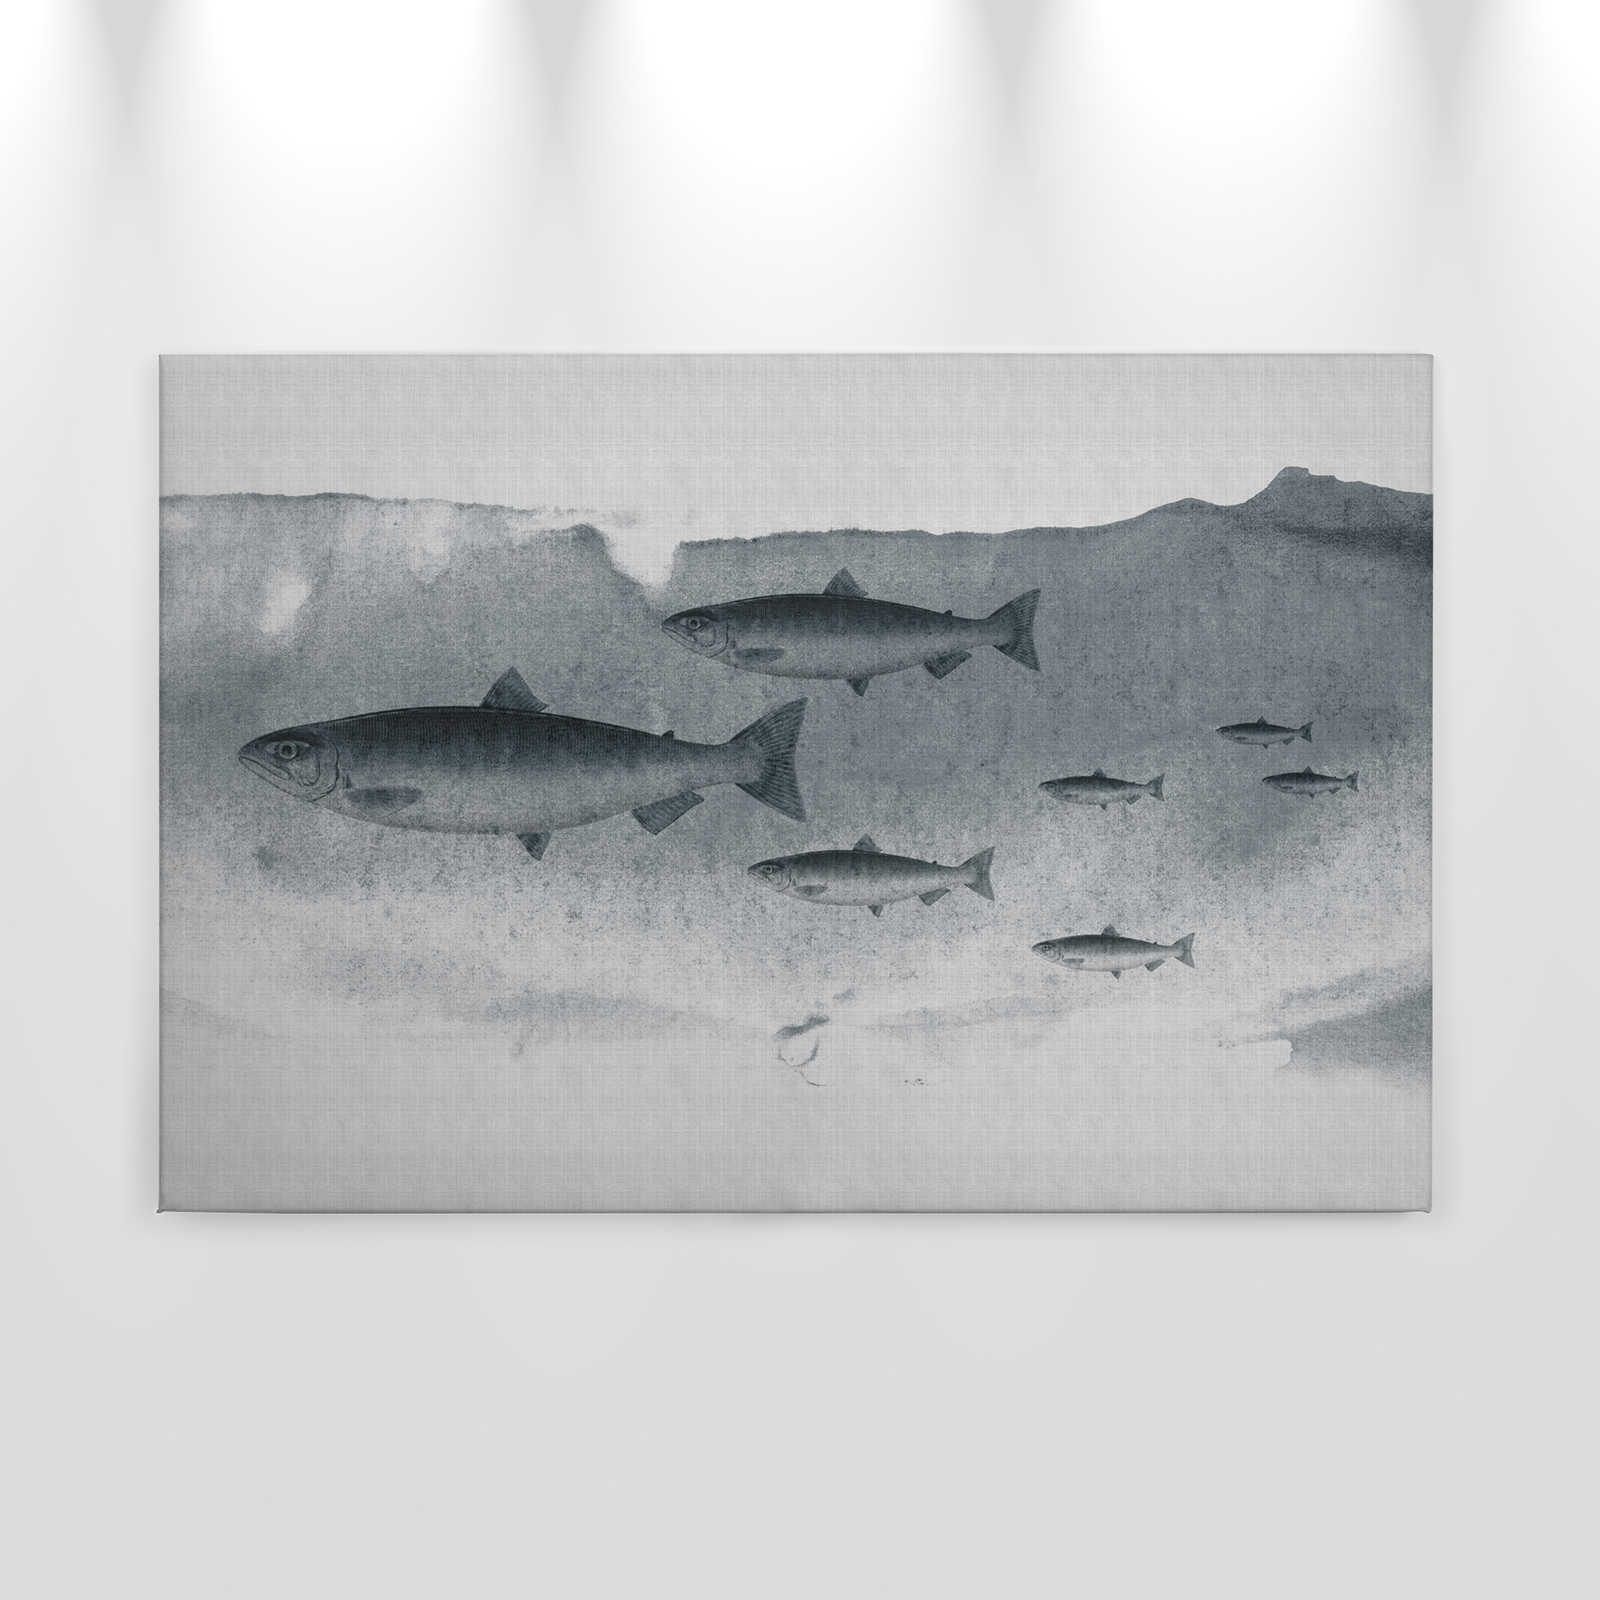             Into the blue 3 - Acuarela de peces en gris como cuadro en lienzo con estructura de lino natural - 0,90 m x 0,60 m
        